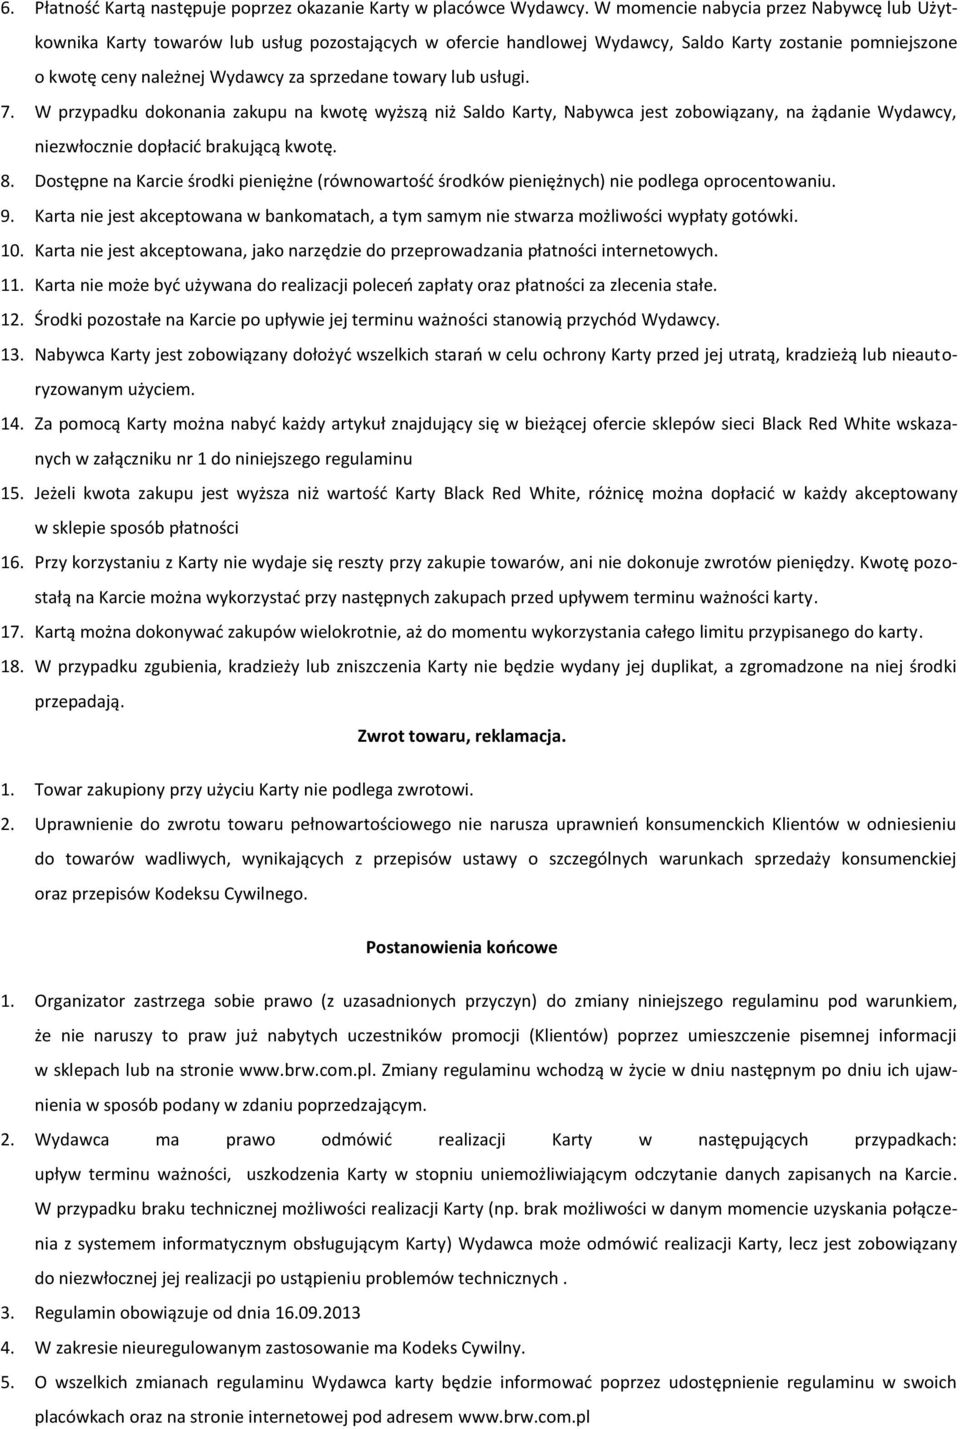 Regulamin Karty BLACK RED WHITE - PDF Darmowe pobieranie